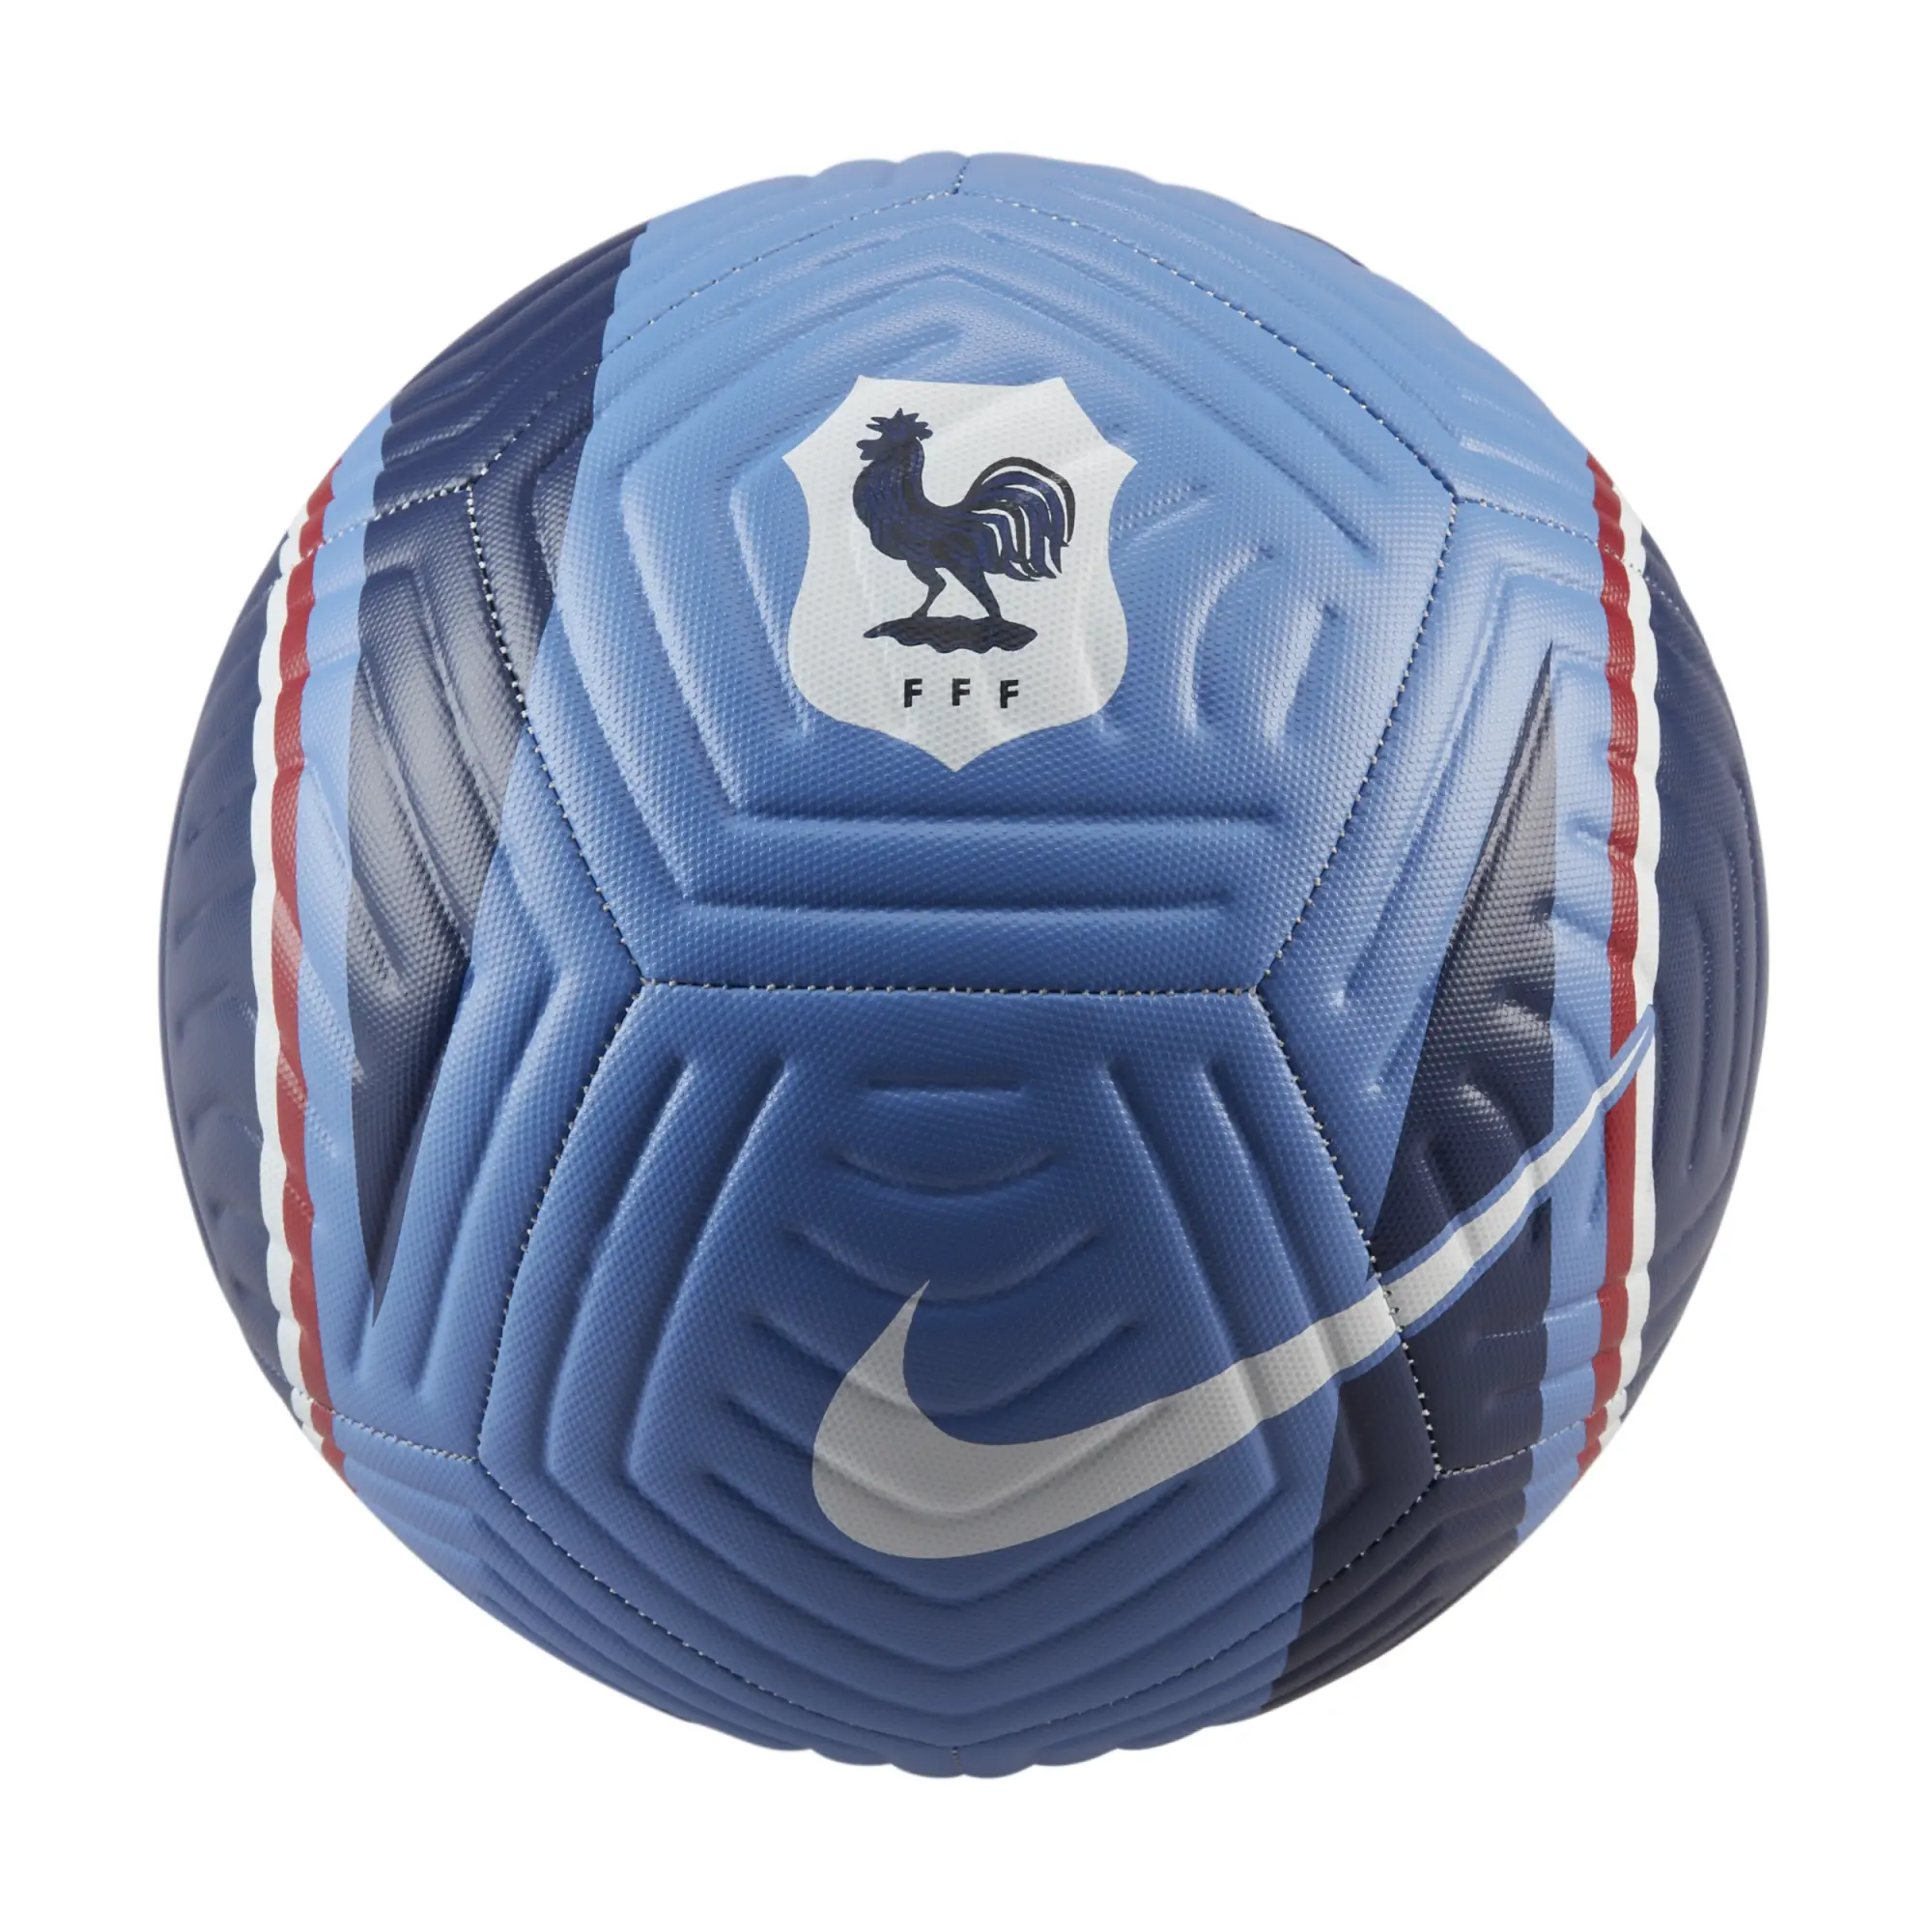 France Women's Nike Strike Ball - Size 5